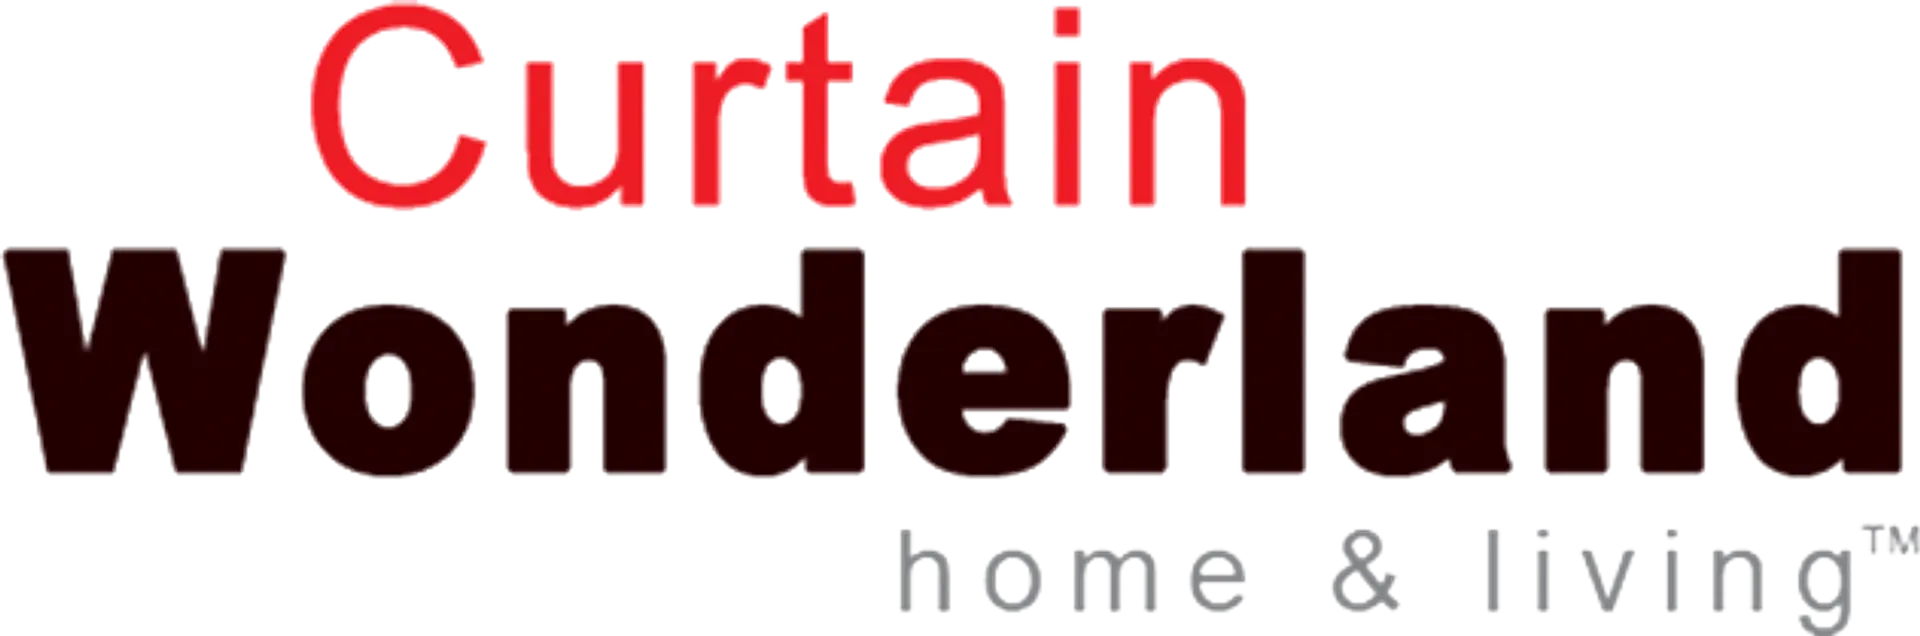 CURTAIN WONDERLAND logo of current flyer